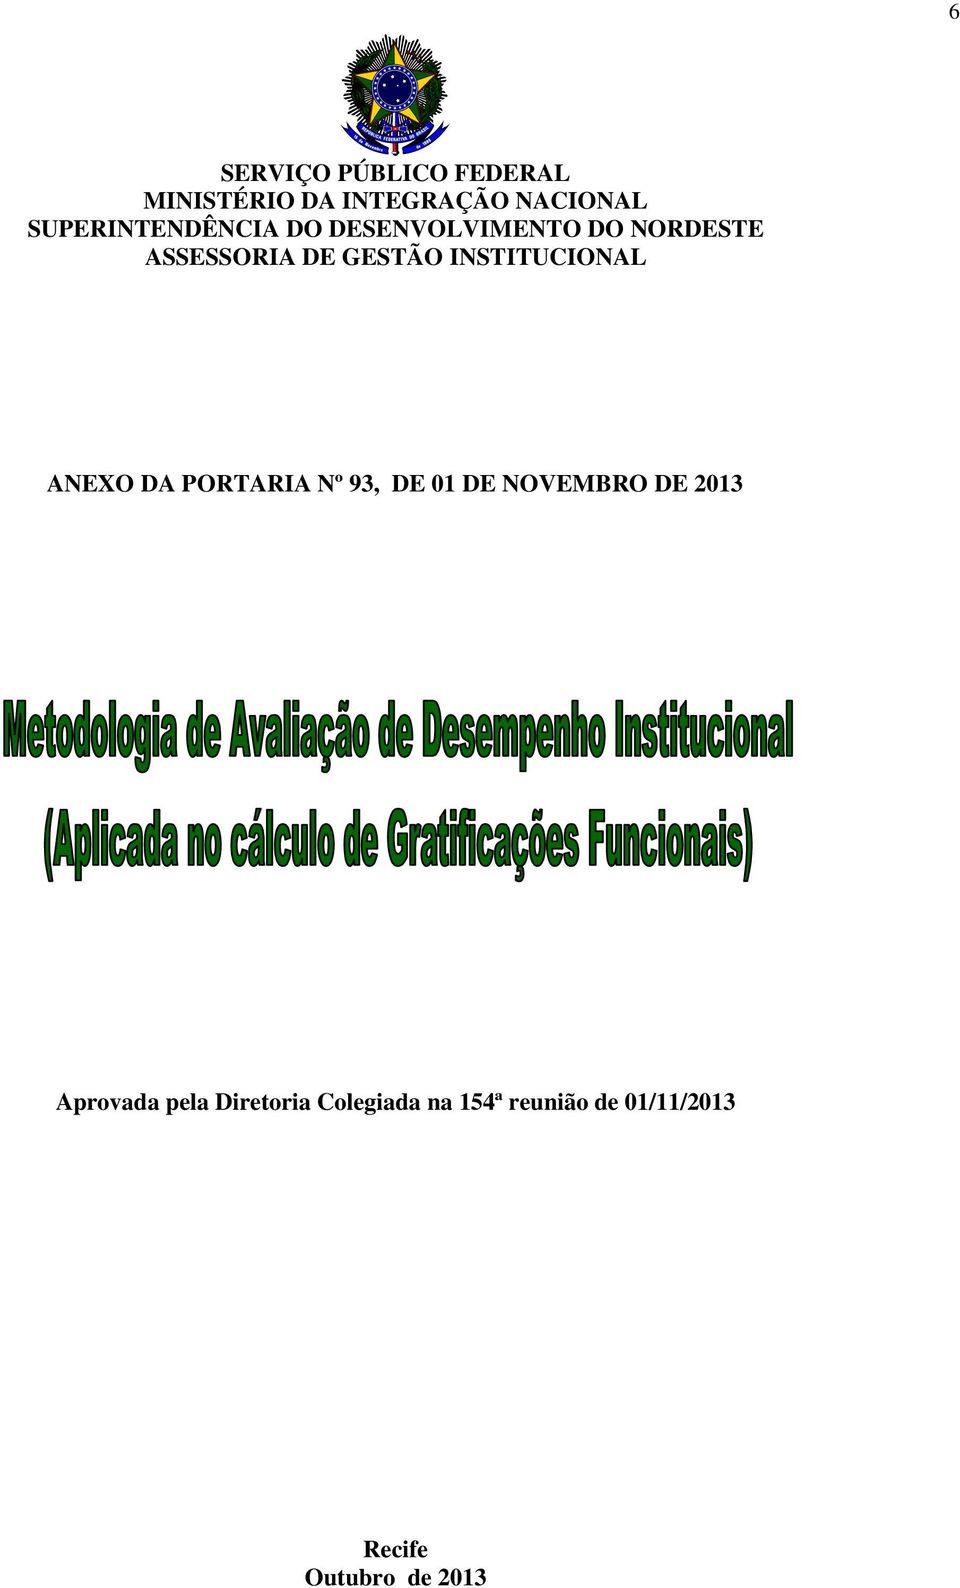 INSTITUCIONAL ANEXO DA PORTARIA Nº 93, DE 01 DE NOVEMBRO DE 2013